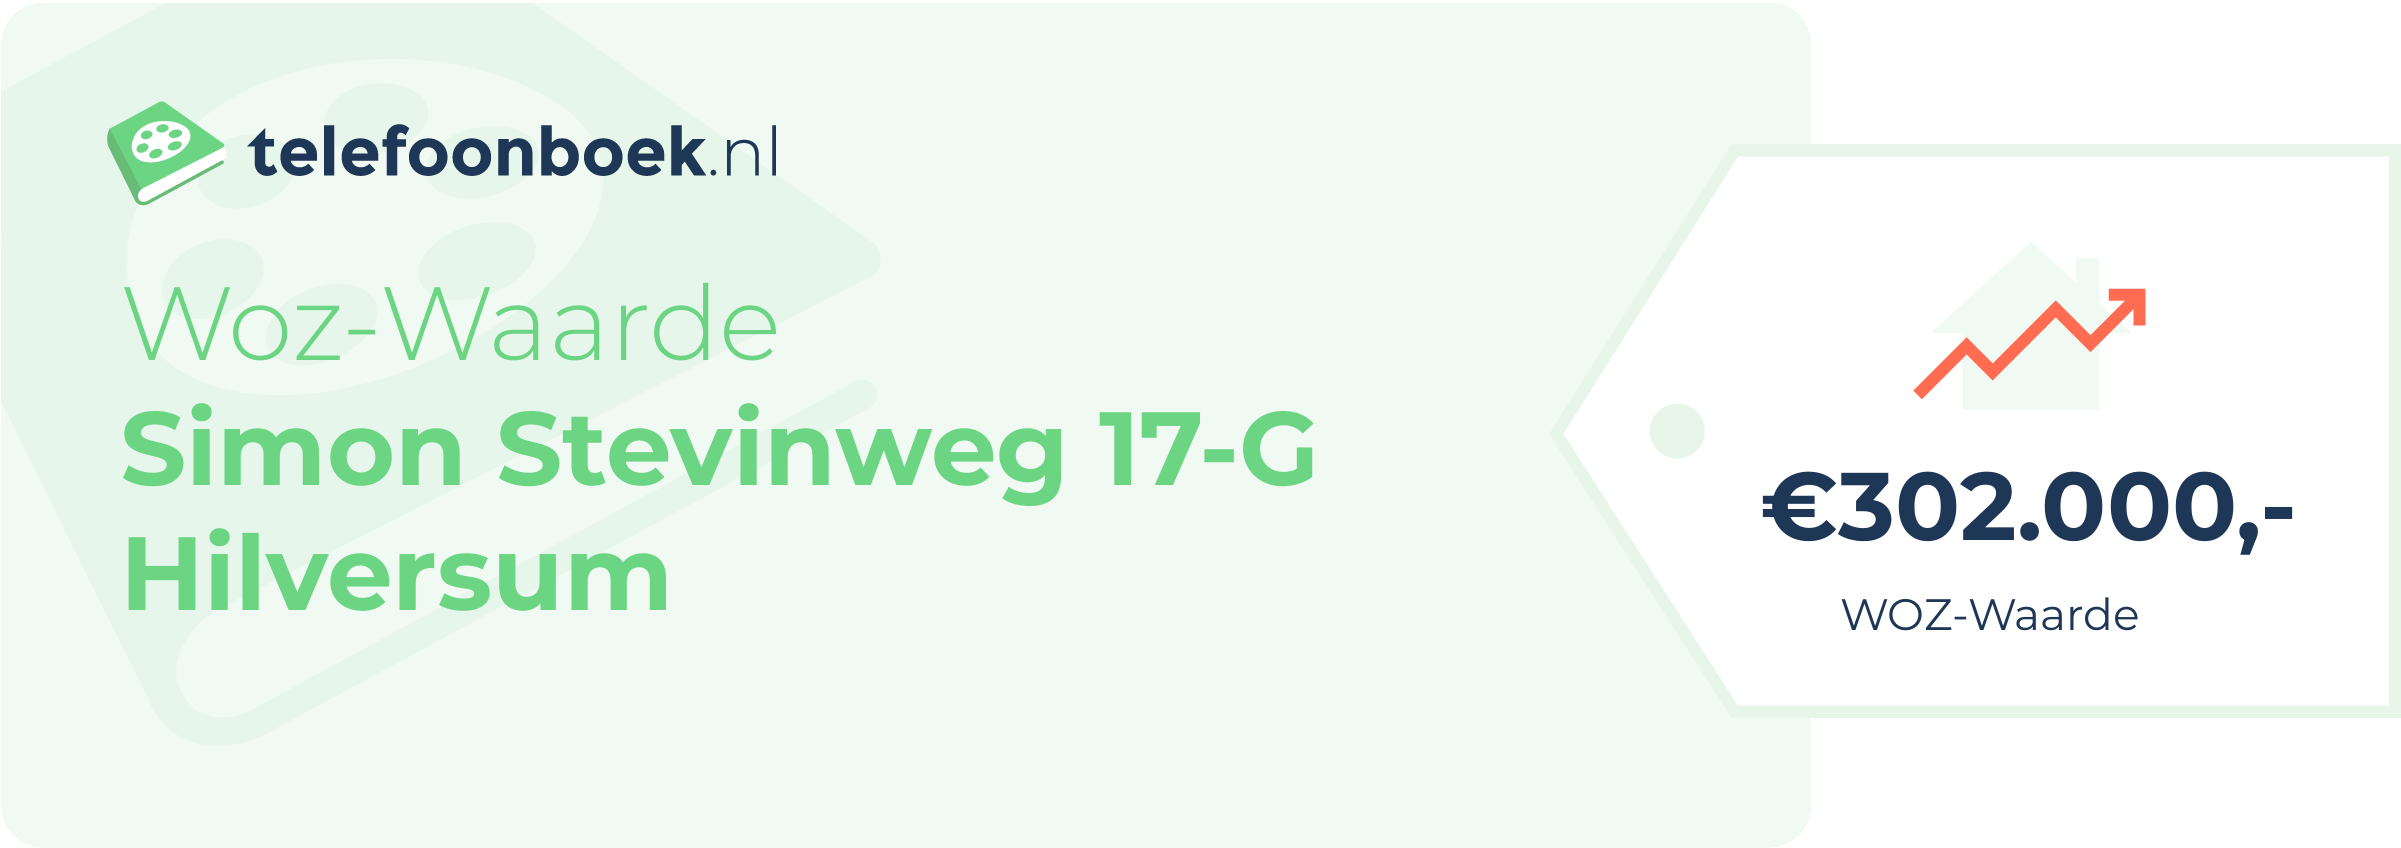 WOZ-waarde Simon Stevinweg 17-G Hilversum